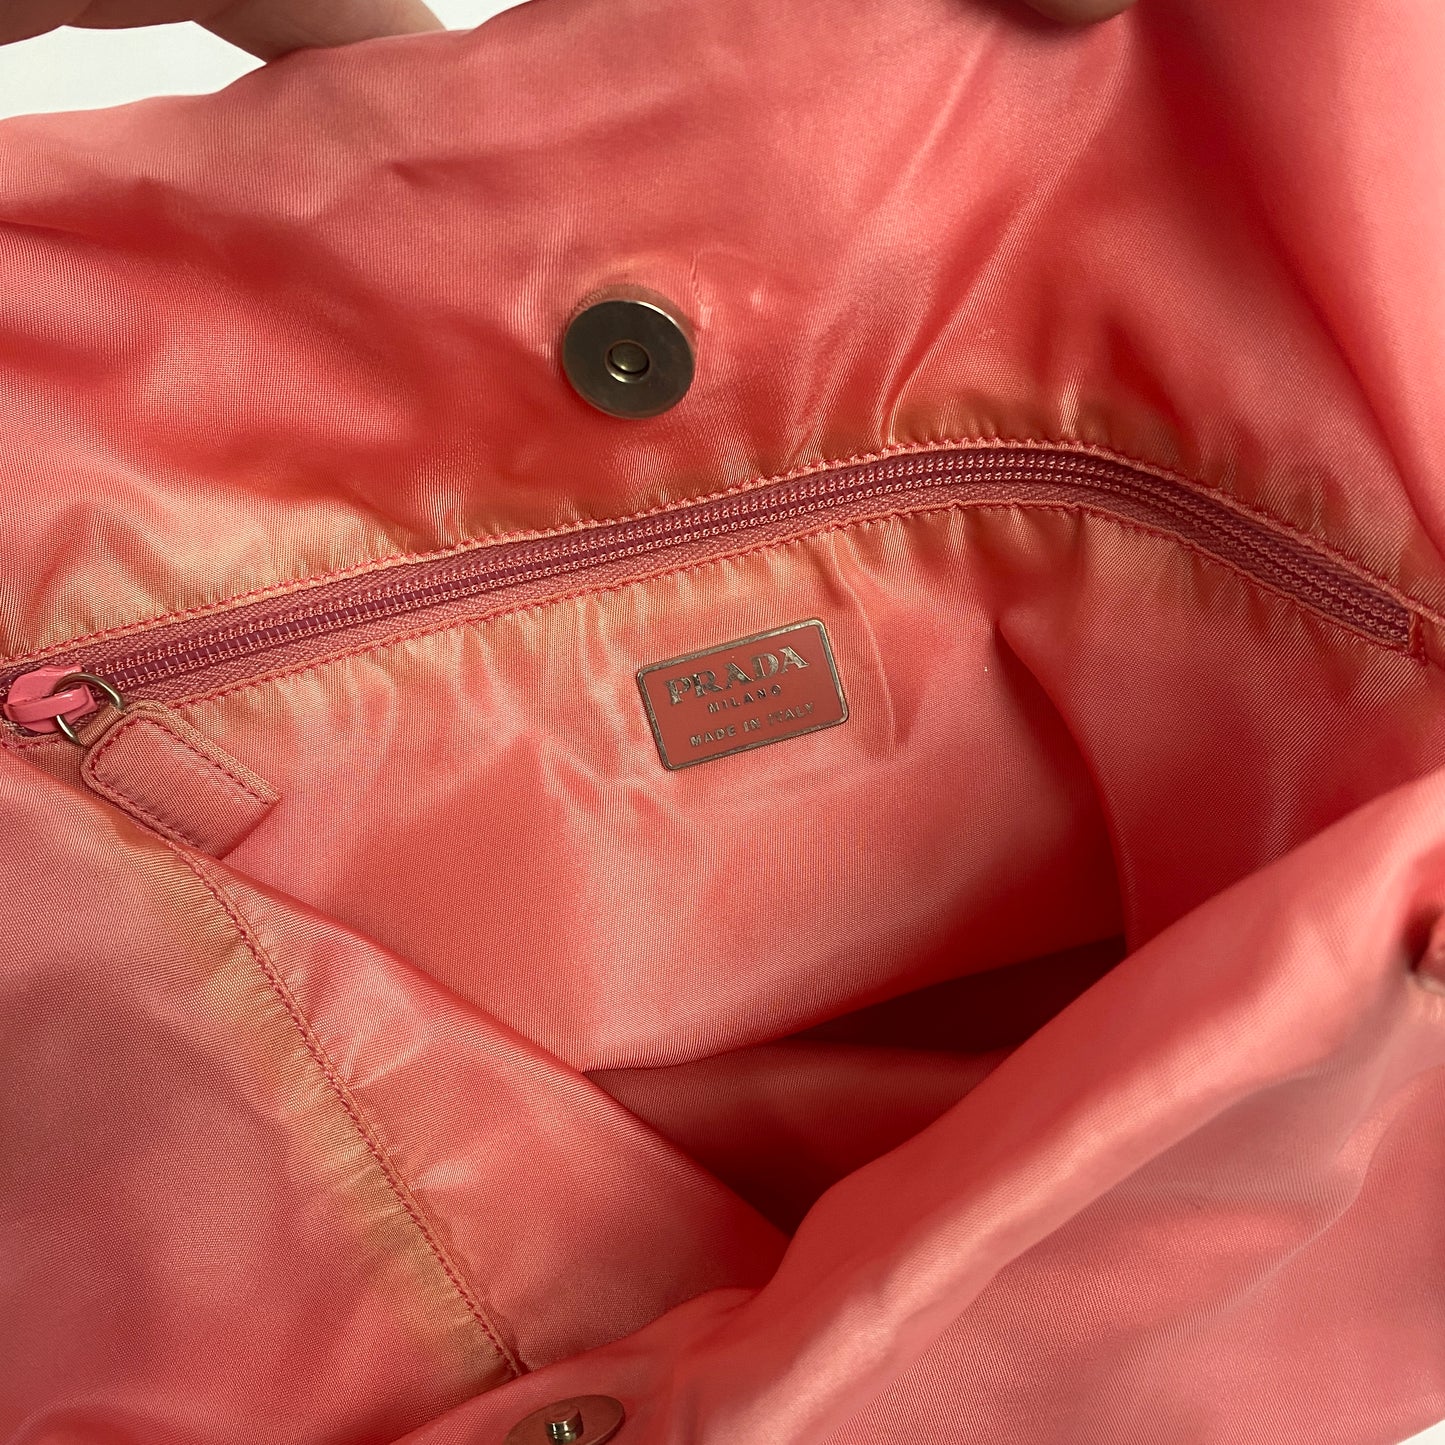 Vintage PRADA purse / tote bag / handbag